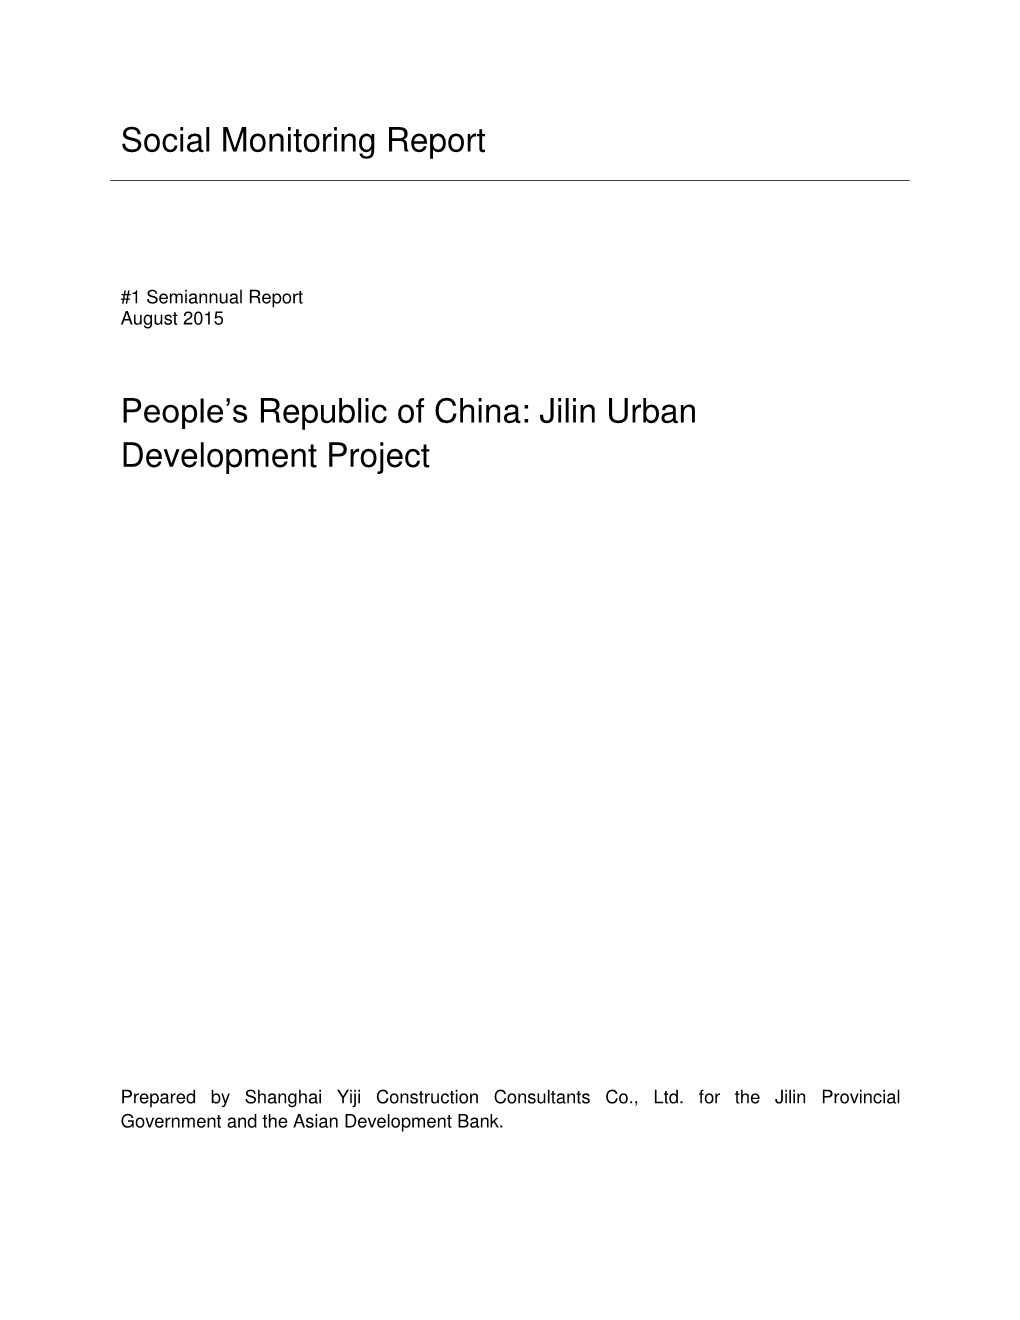 Jilin Urban Development Project: Baseline Surveying Report Of